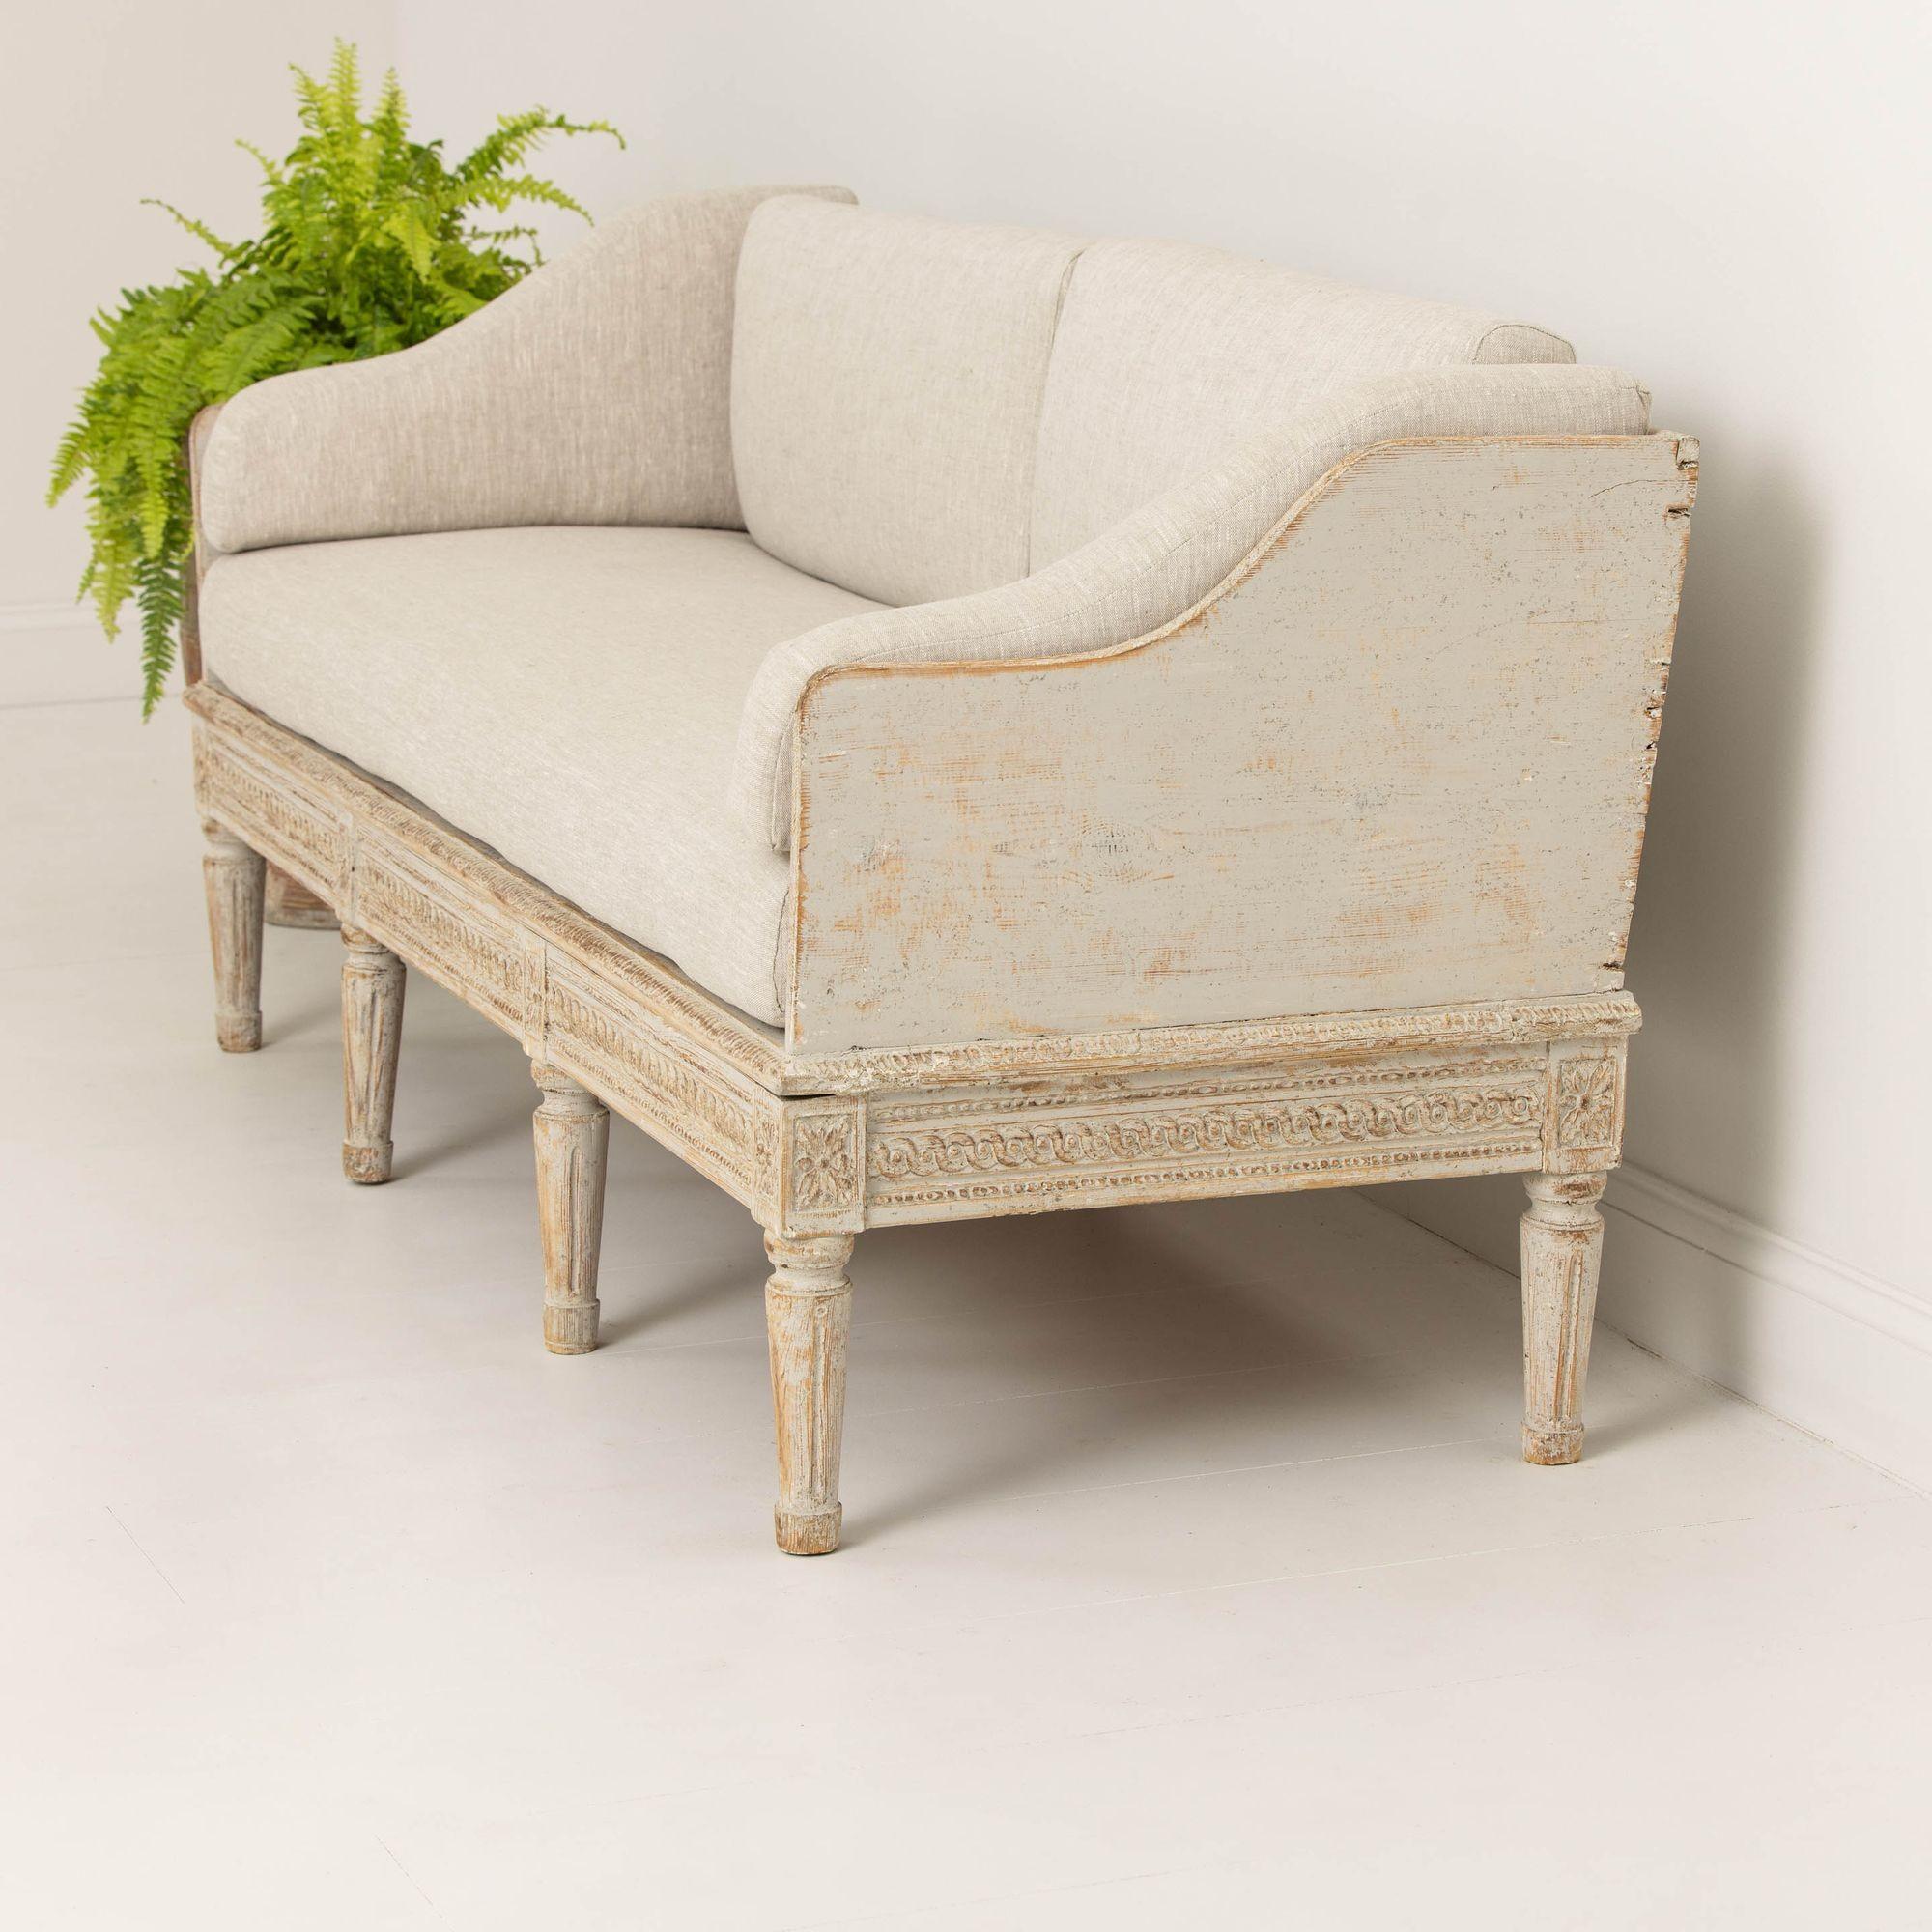 18th c. Swedish Gustavian Period Painted Sofa 'Trägsoffa' For Sale 7